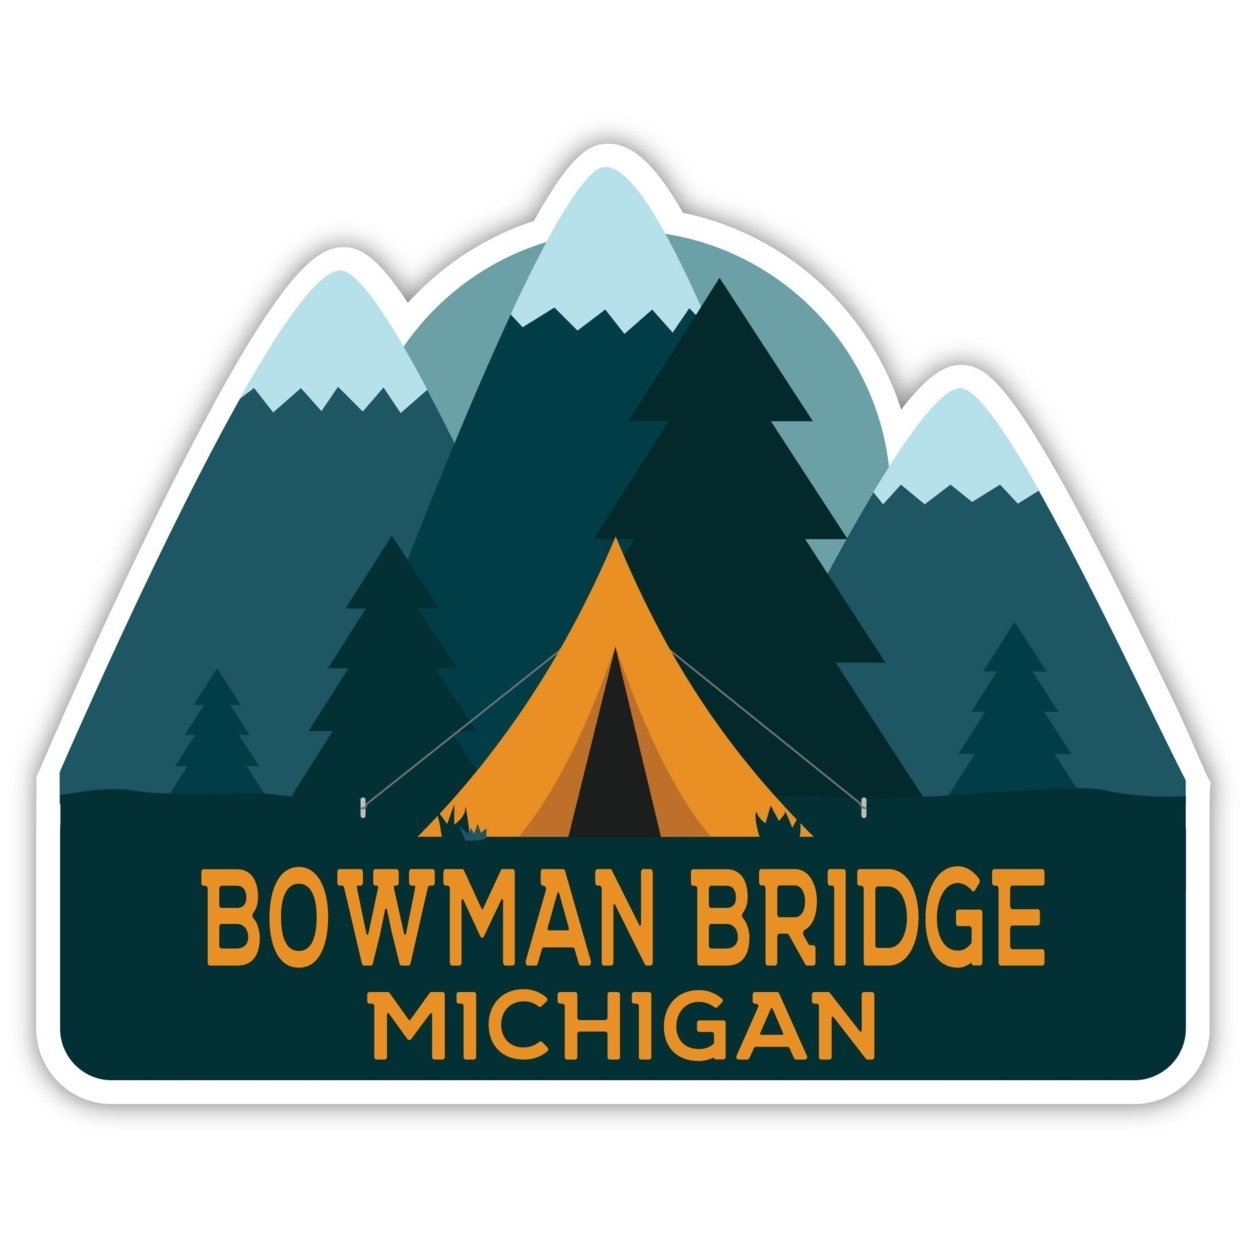 Bowman Bridge Michigan Souvenir Decorative Stickers (Choose Theme And Size) - 4-Pack, 4-Inch, Tent